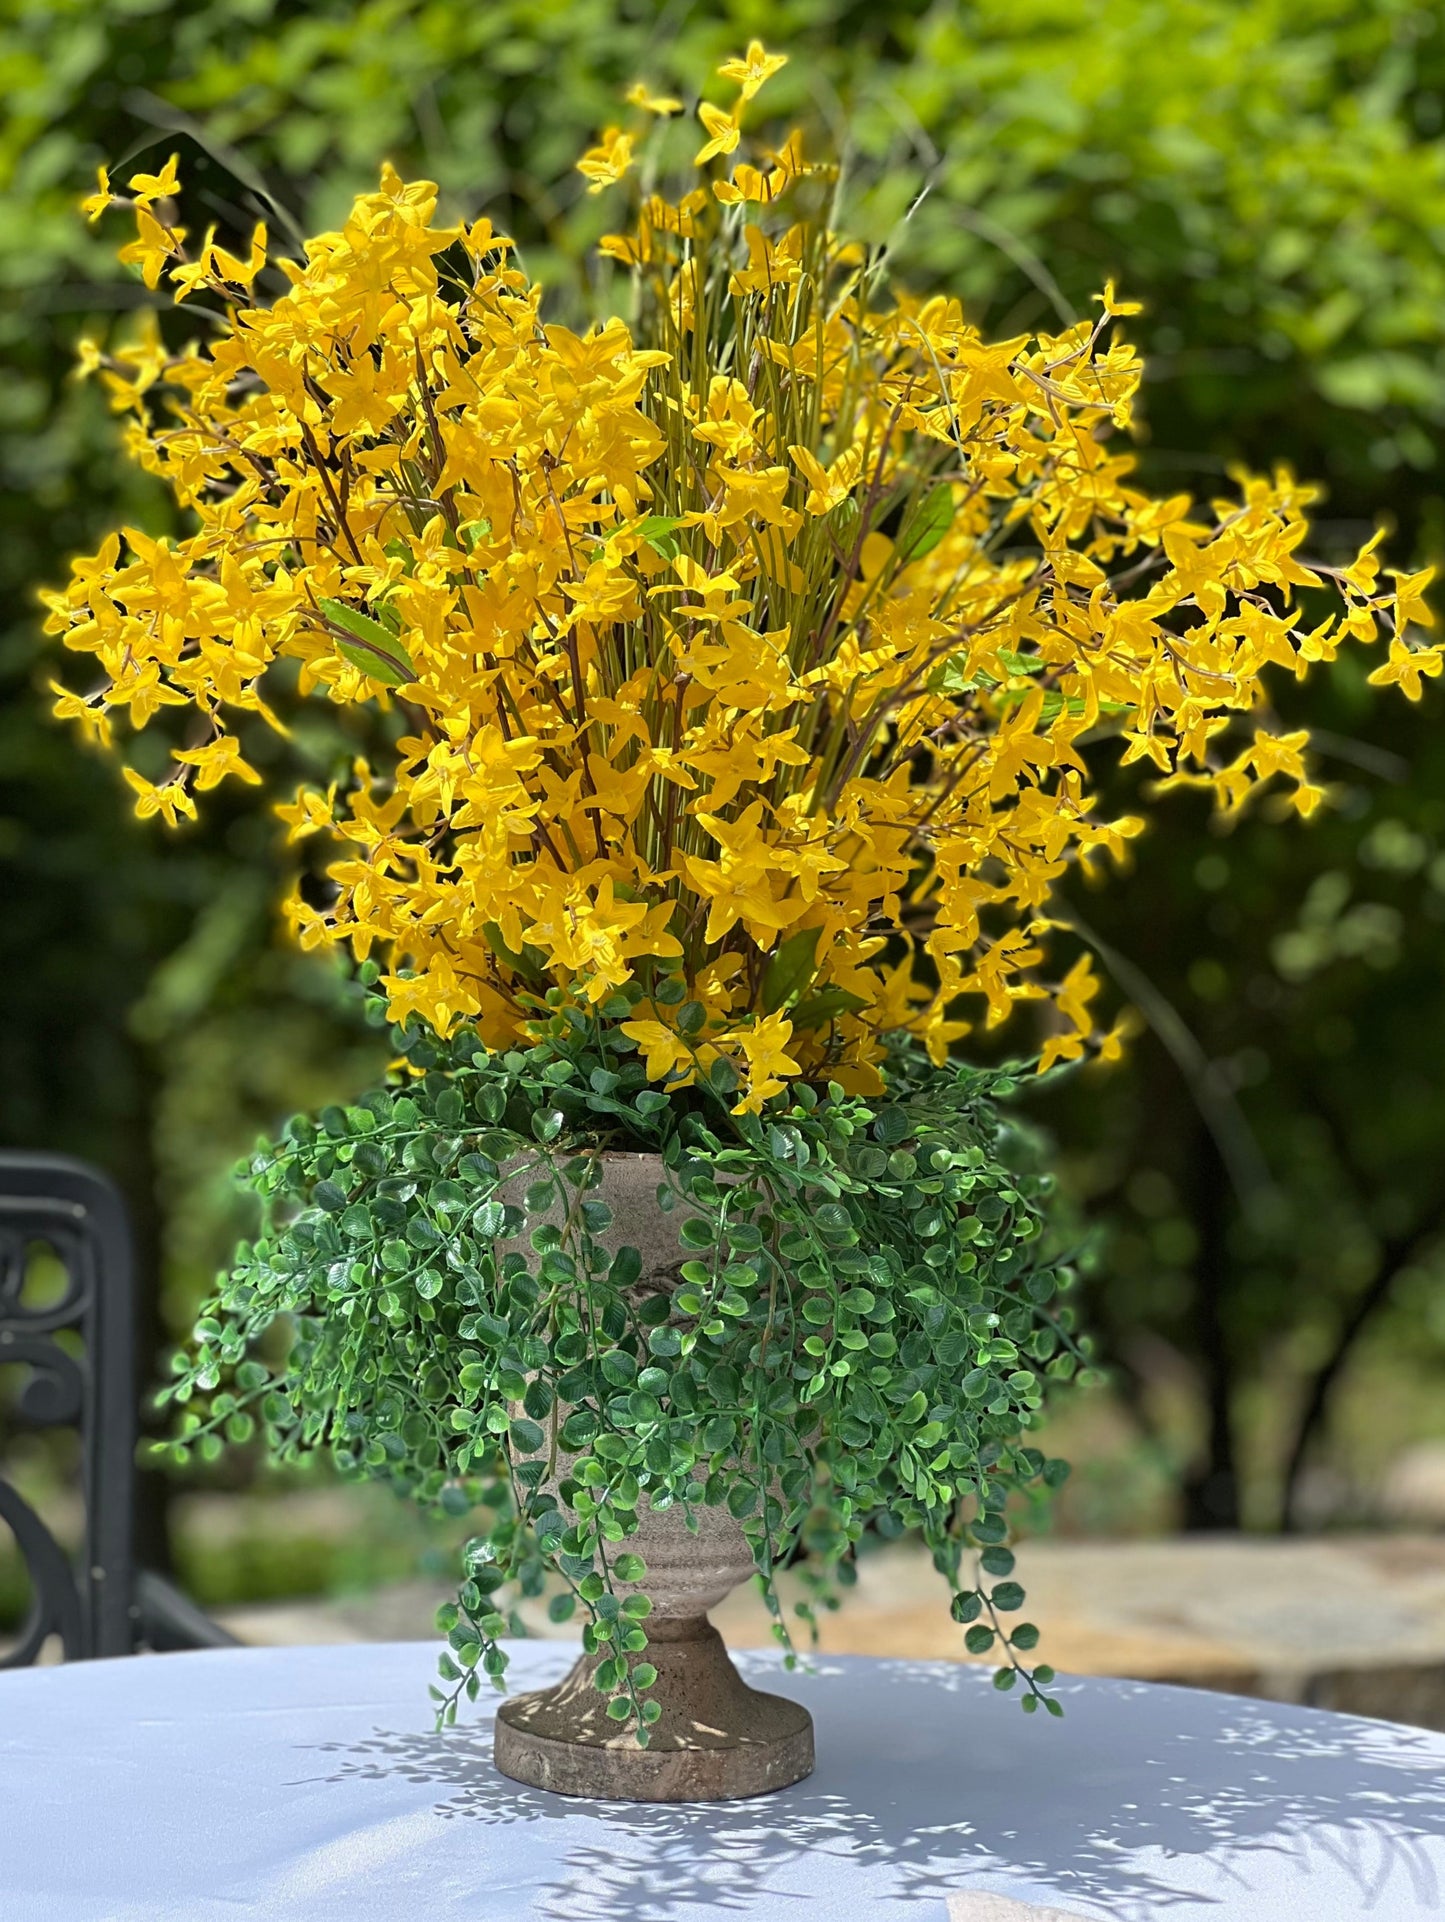 Forsythia amarilla, pastos, exhibición floral de urna alta